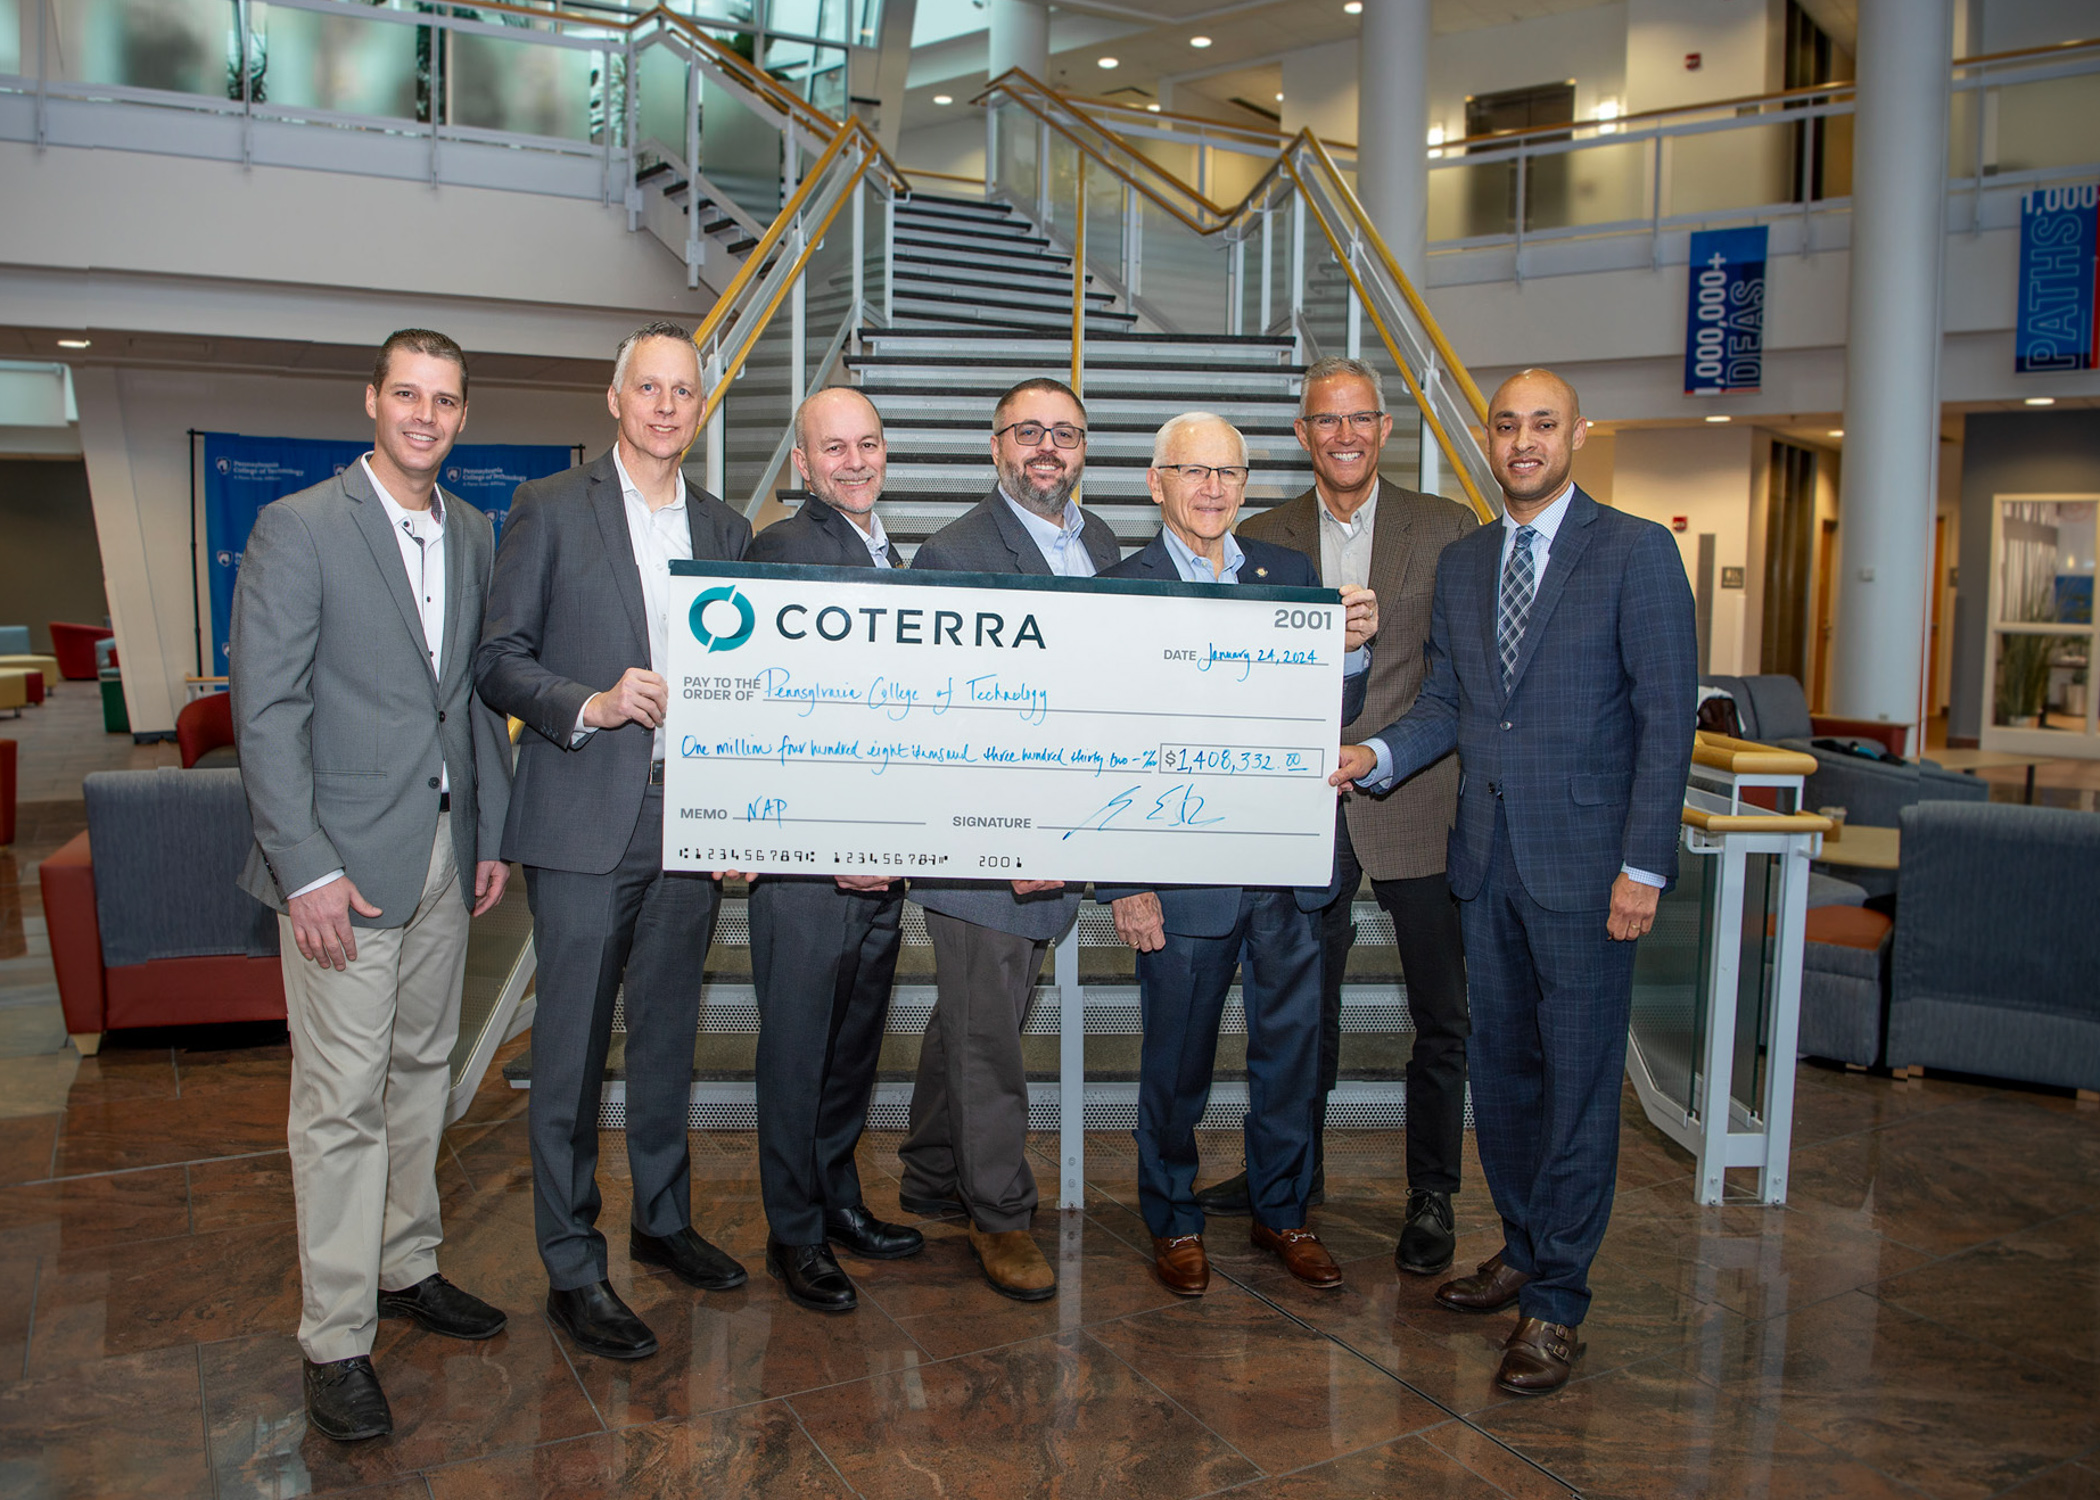 Coterra Energy presents $1.4 million check to Penn College